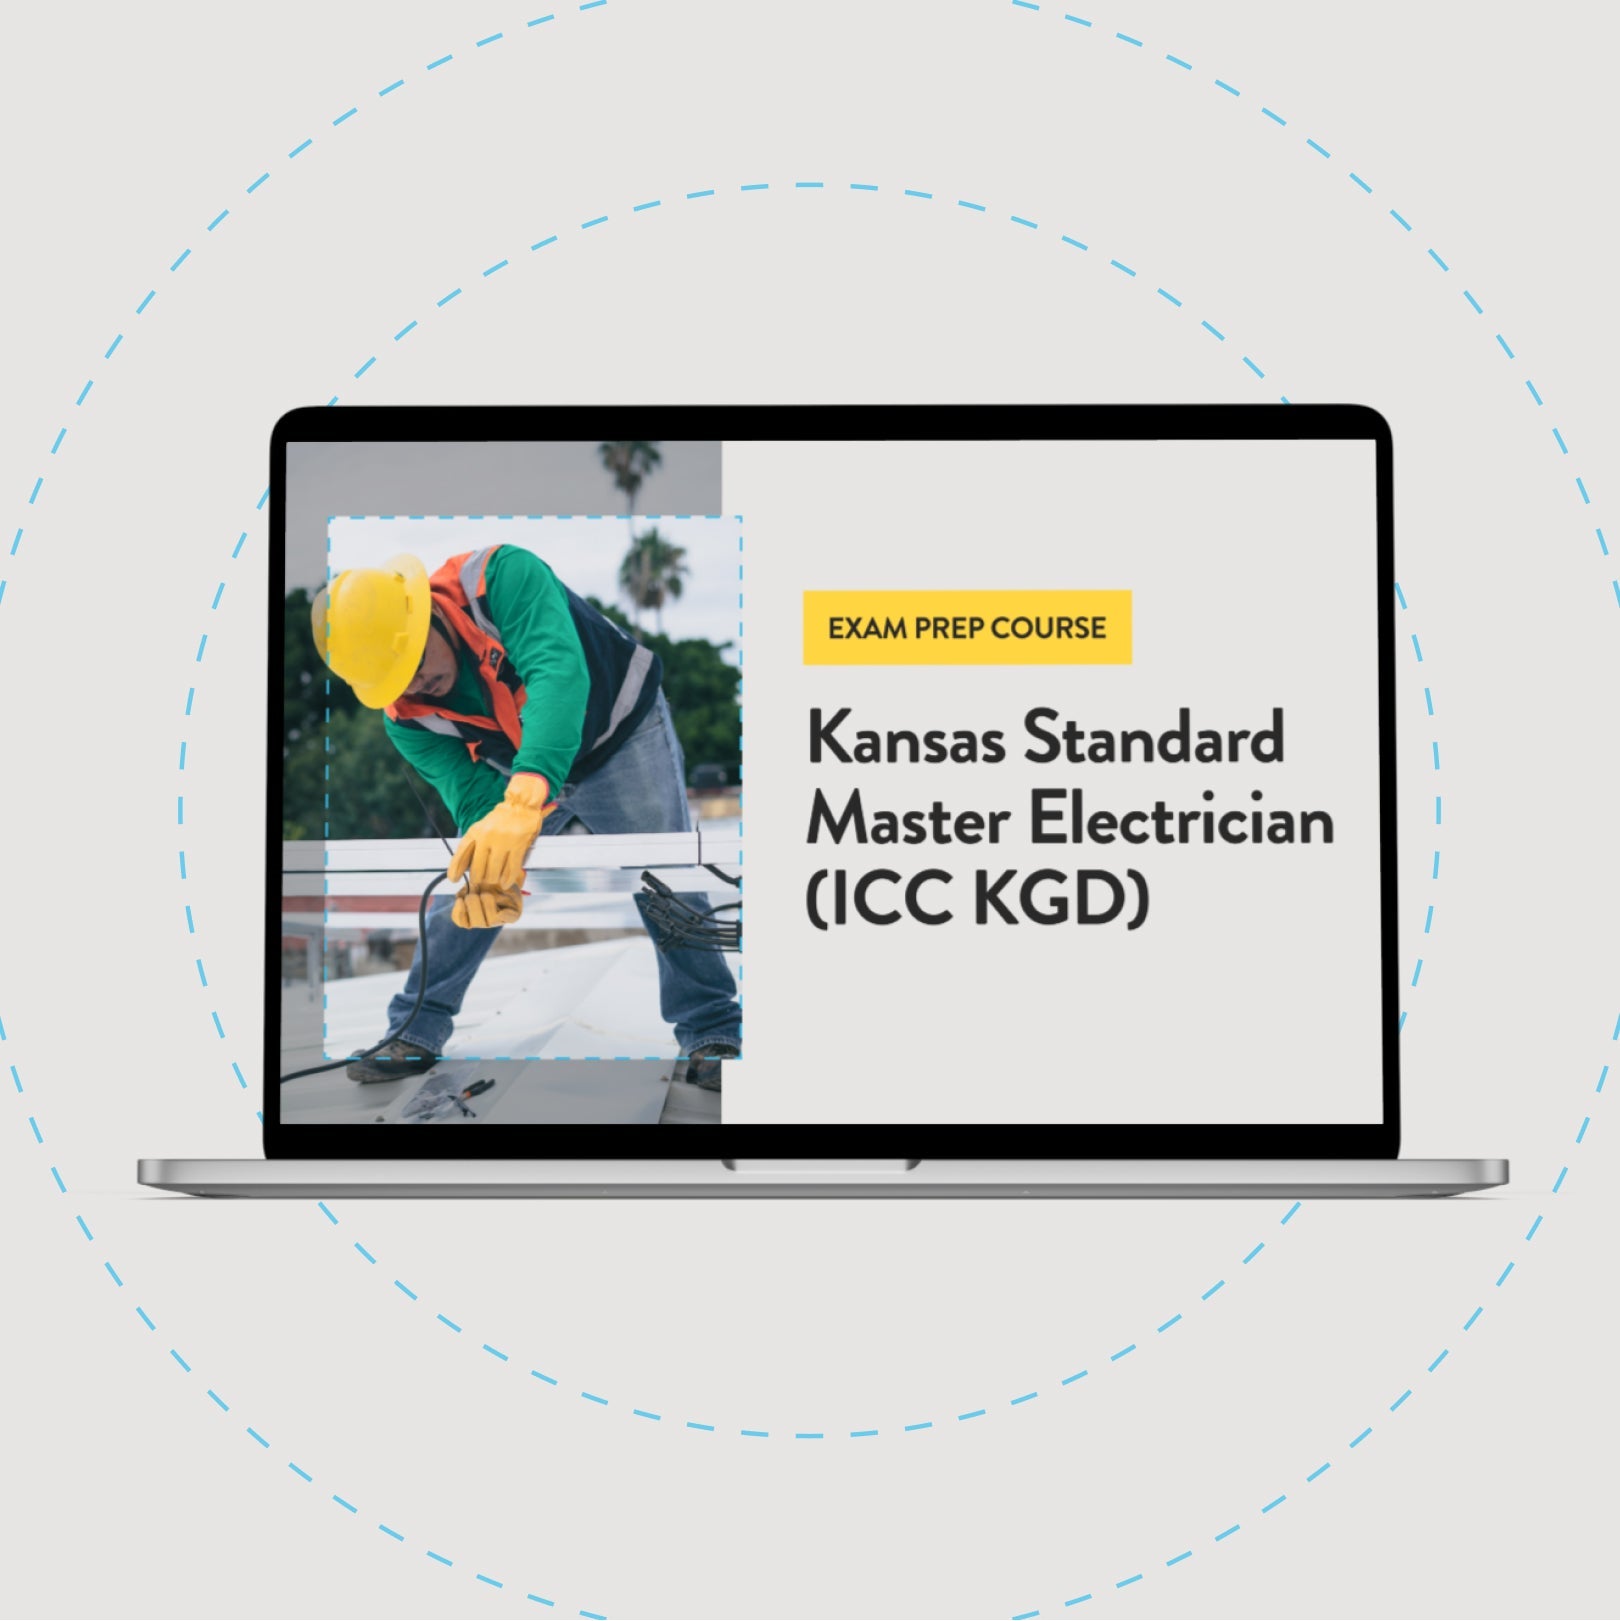 Kansas Standard Master Electrician (ICC KGD) Exam Prep Course